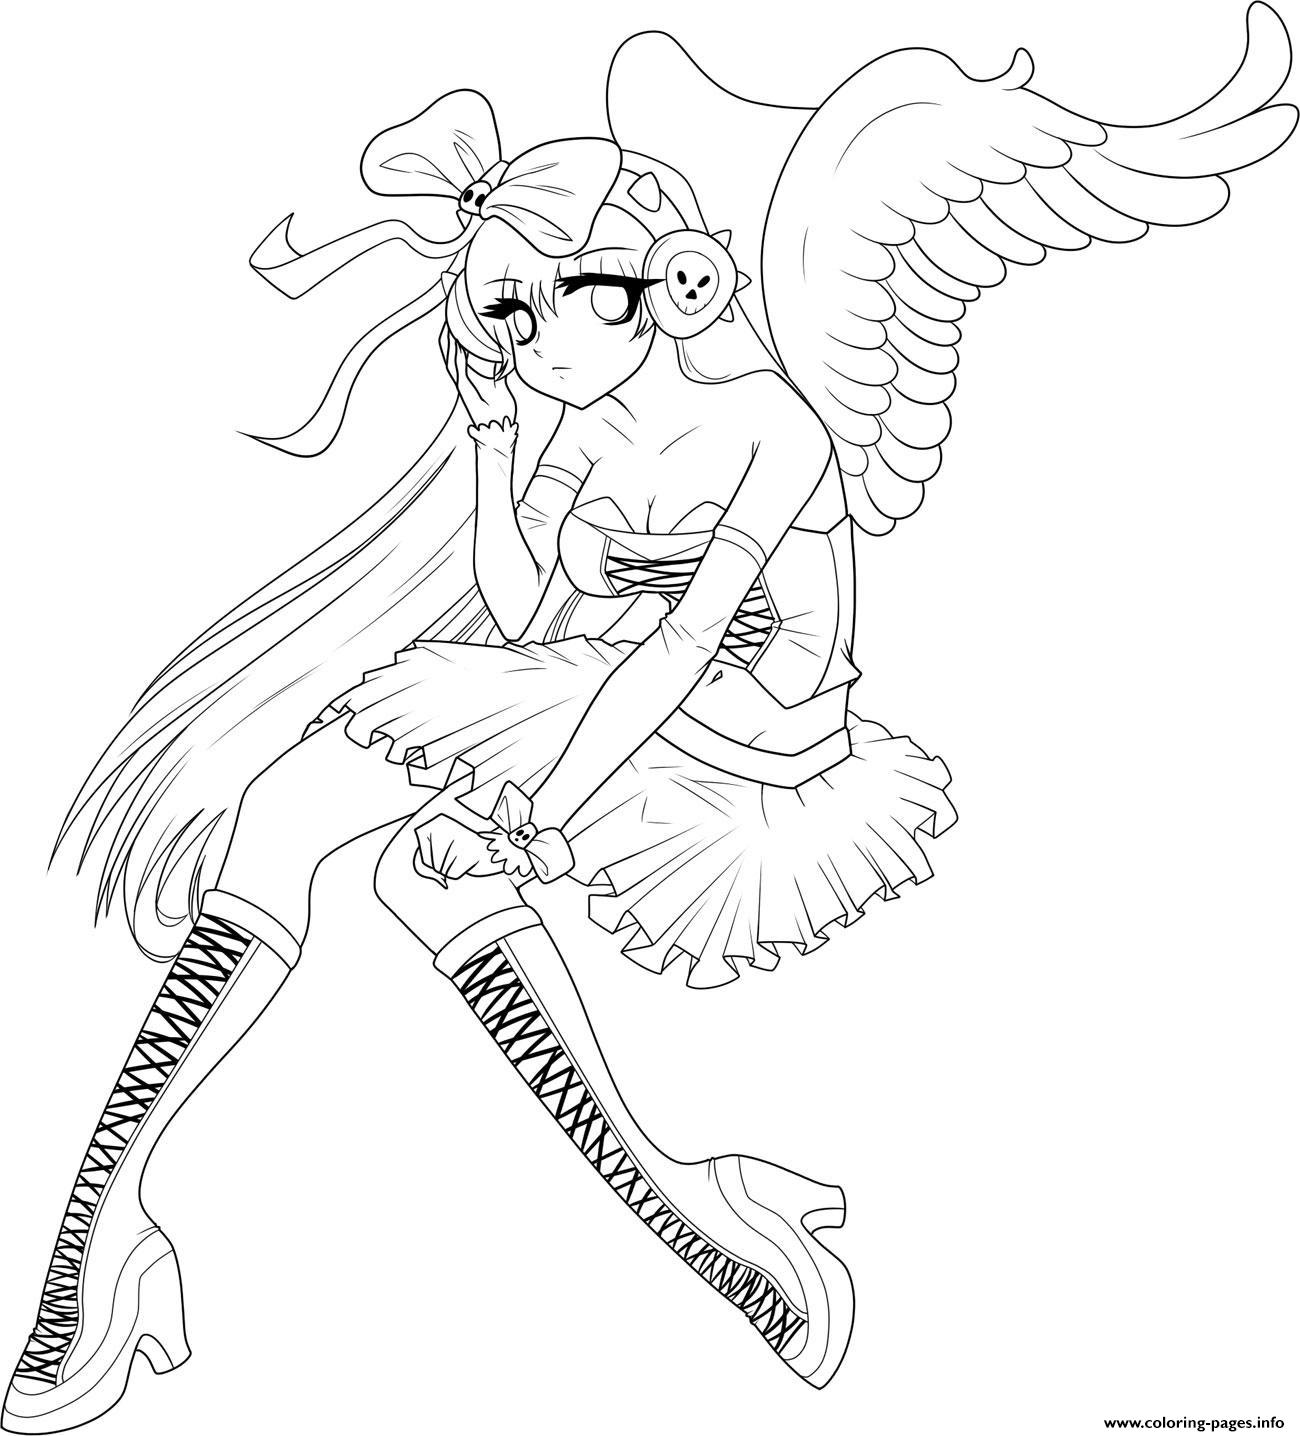 Anime Angel Girl 5 coloring